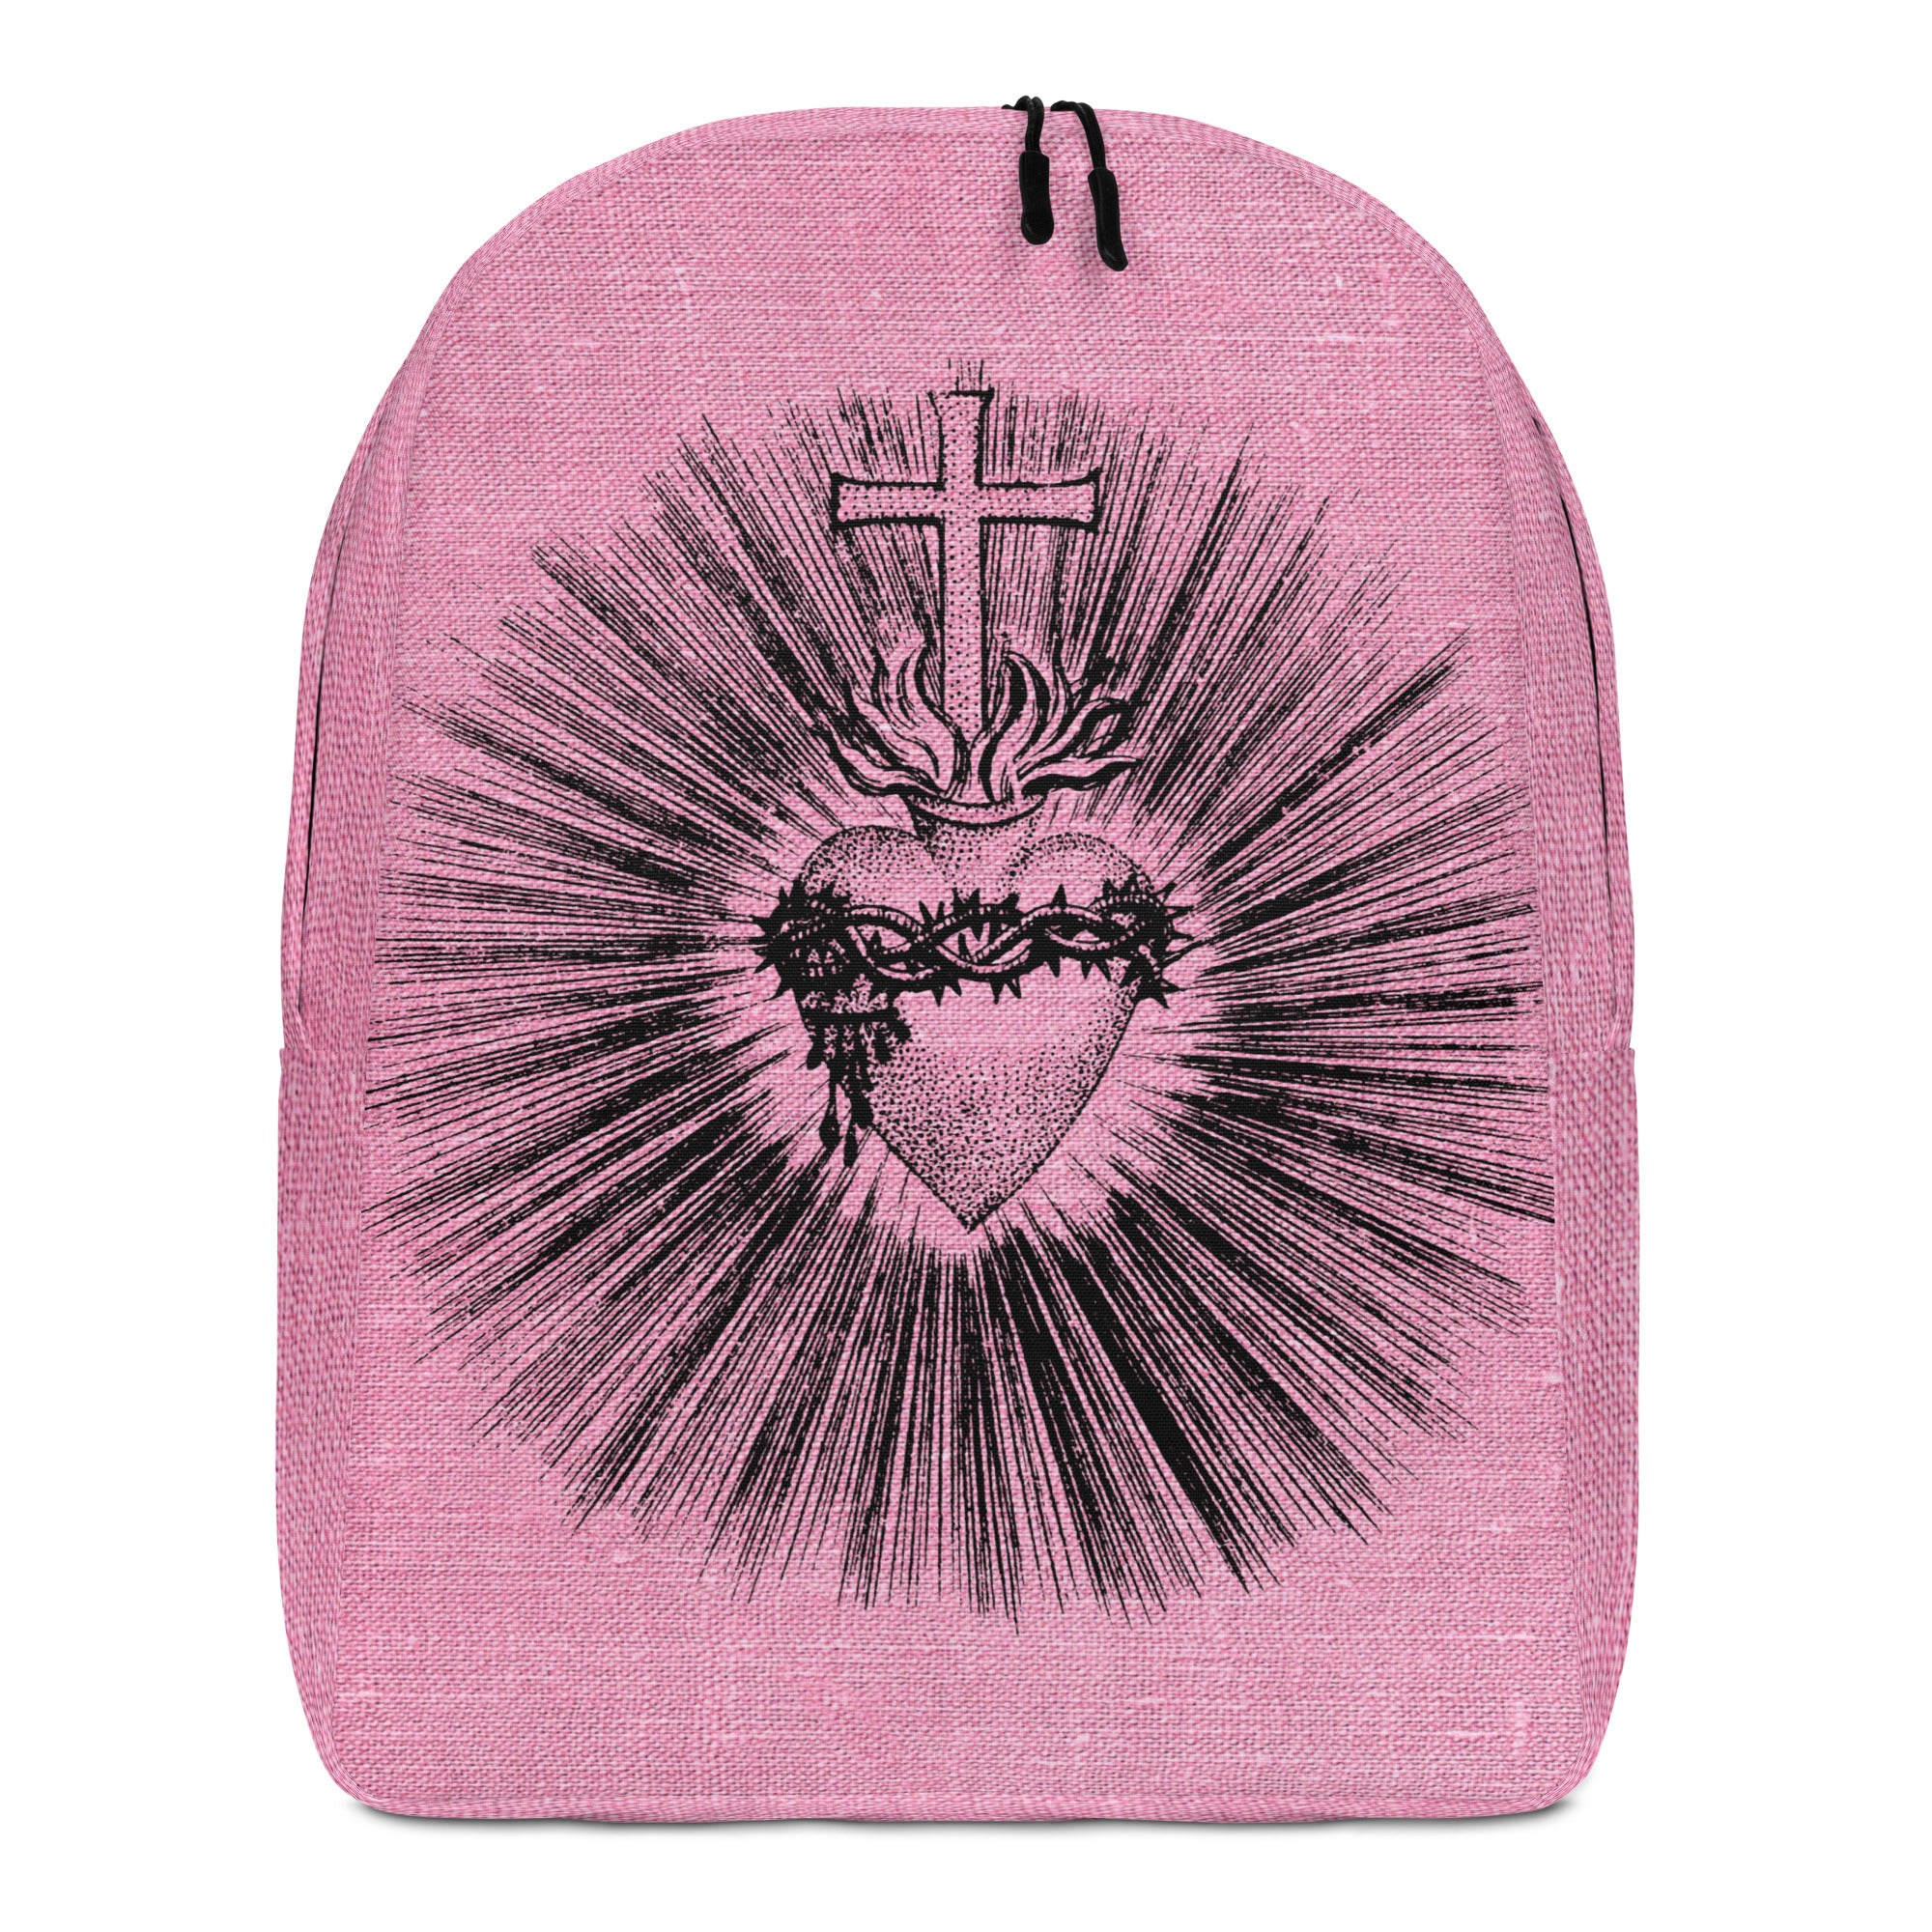 Minimalist Backpack Crucifix Cross Heart Design